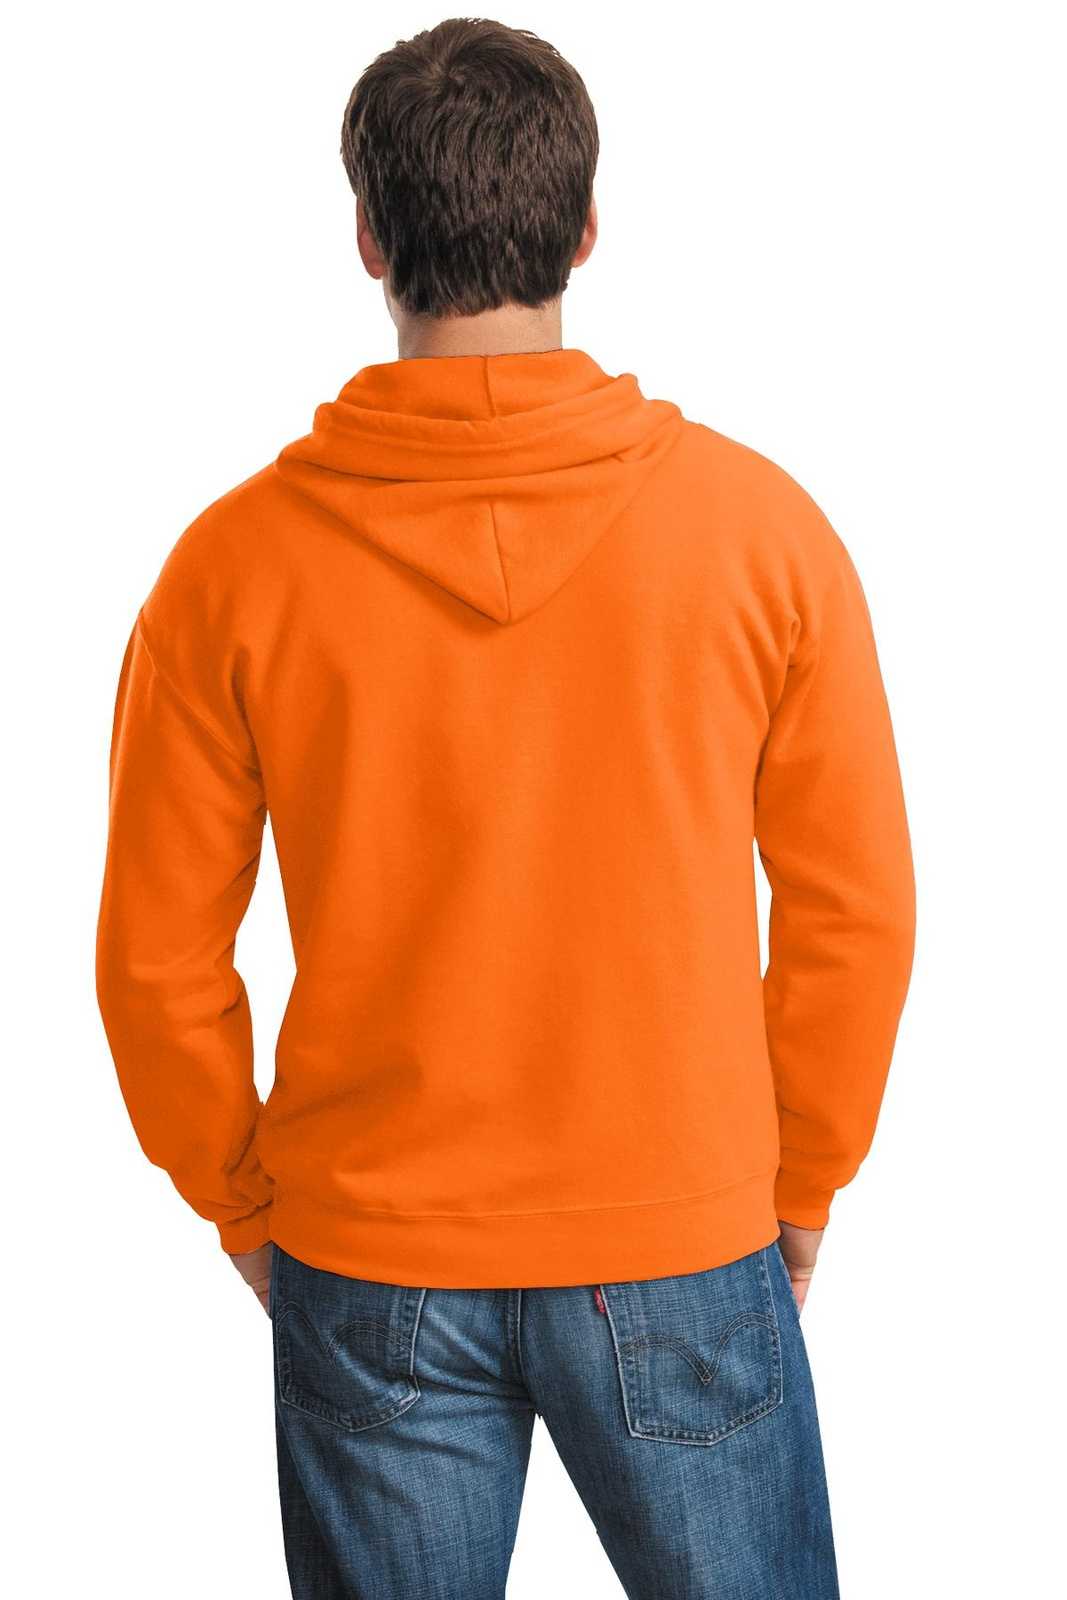 Gildan 18600 Heavy Blend Full-Zip Hooded Sweatshirt - S. Orange - HIT a Double